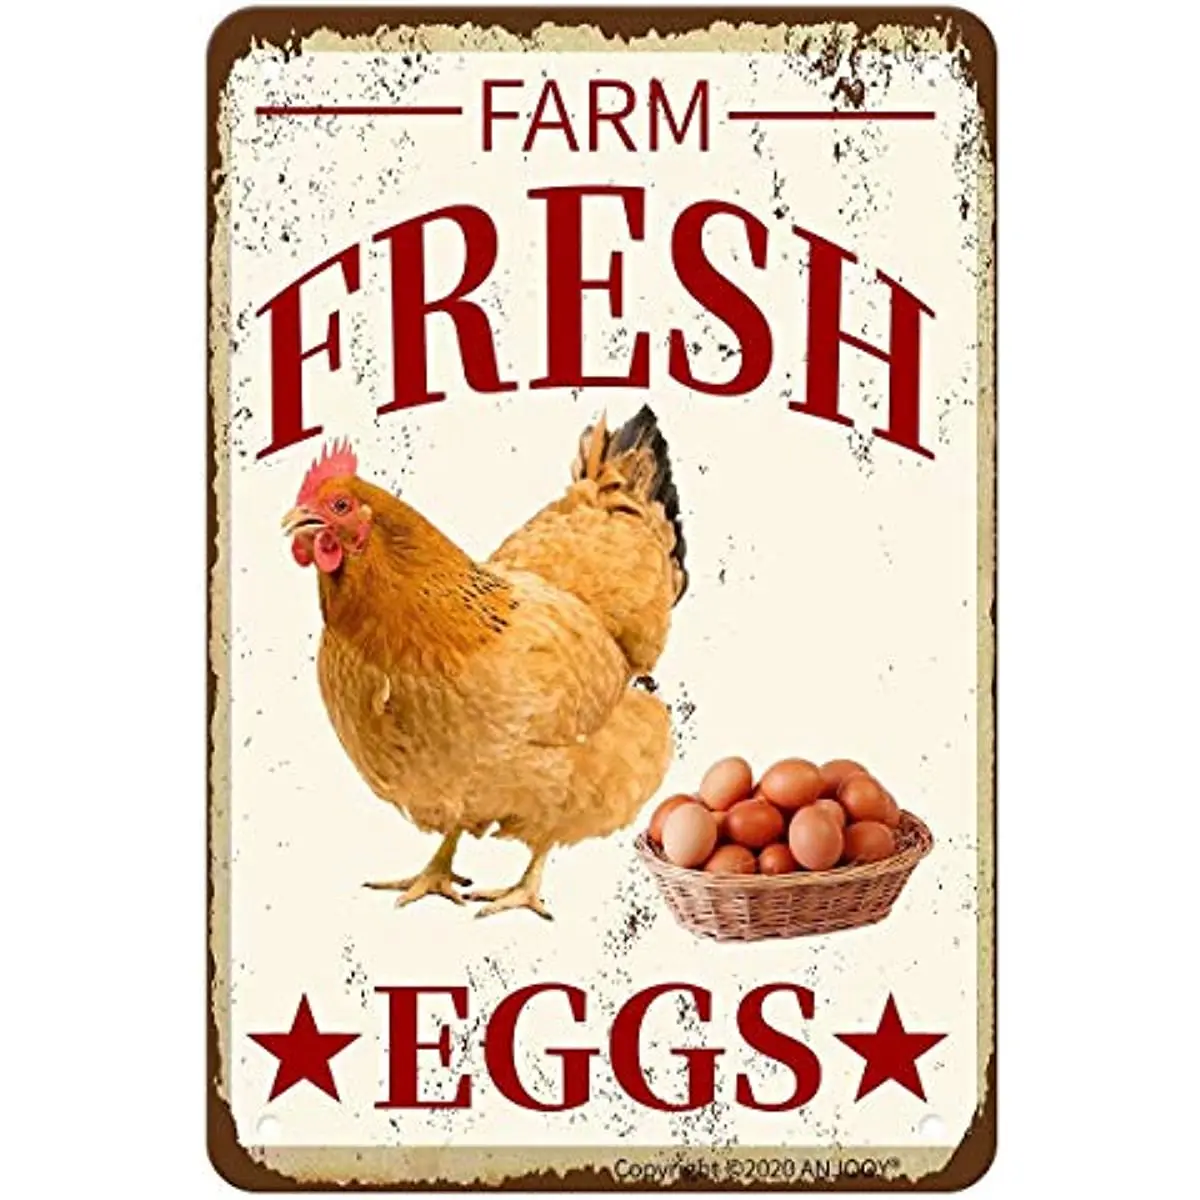 

Metal tin sign farm fresh egg - kitchen farmhouse store market rural farm barn supermarket outdoor wall decoration